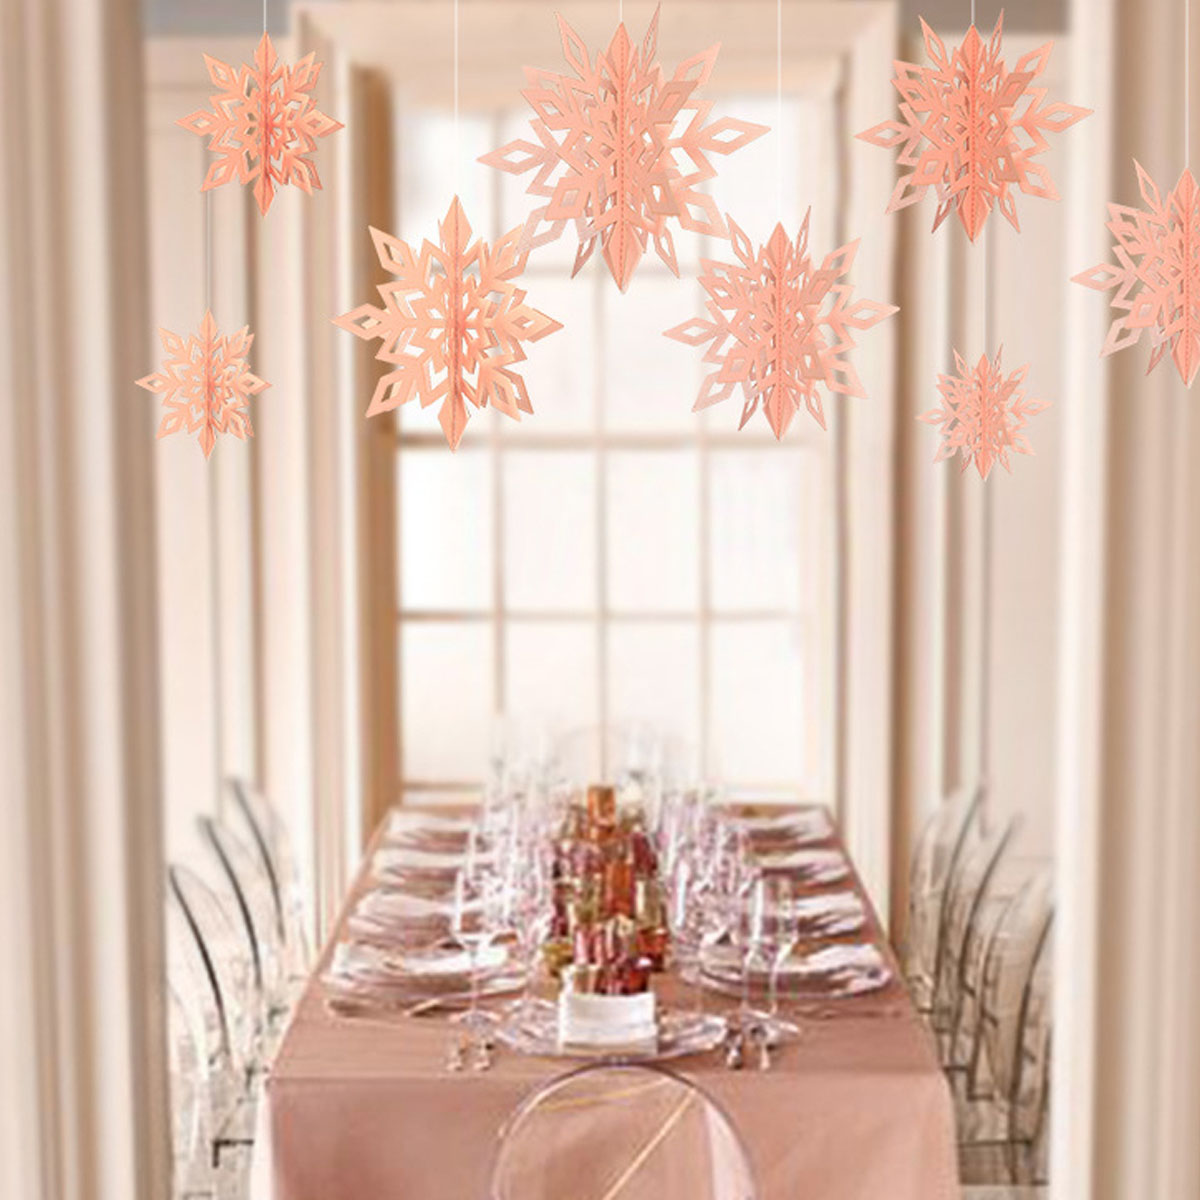 6pcs-Christmas-Party-Hanging-Decoration-Baubles-Xmas-Snowflakes-Home-Bar-Decor-1744746-8